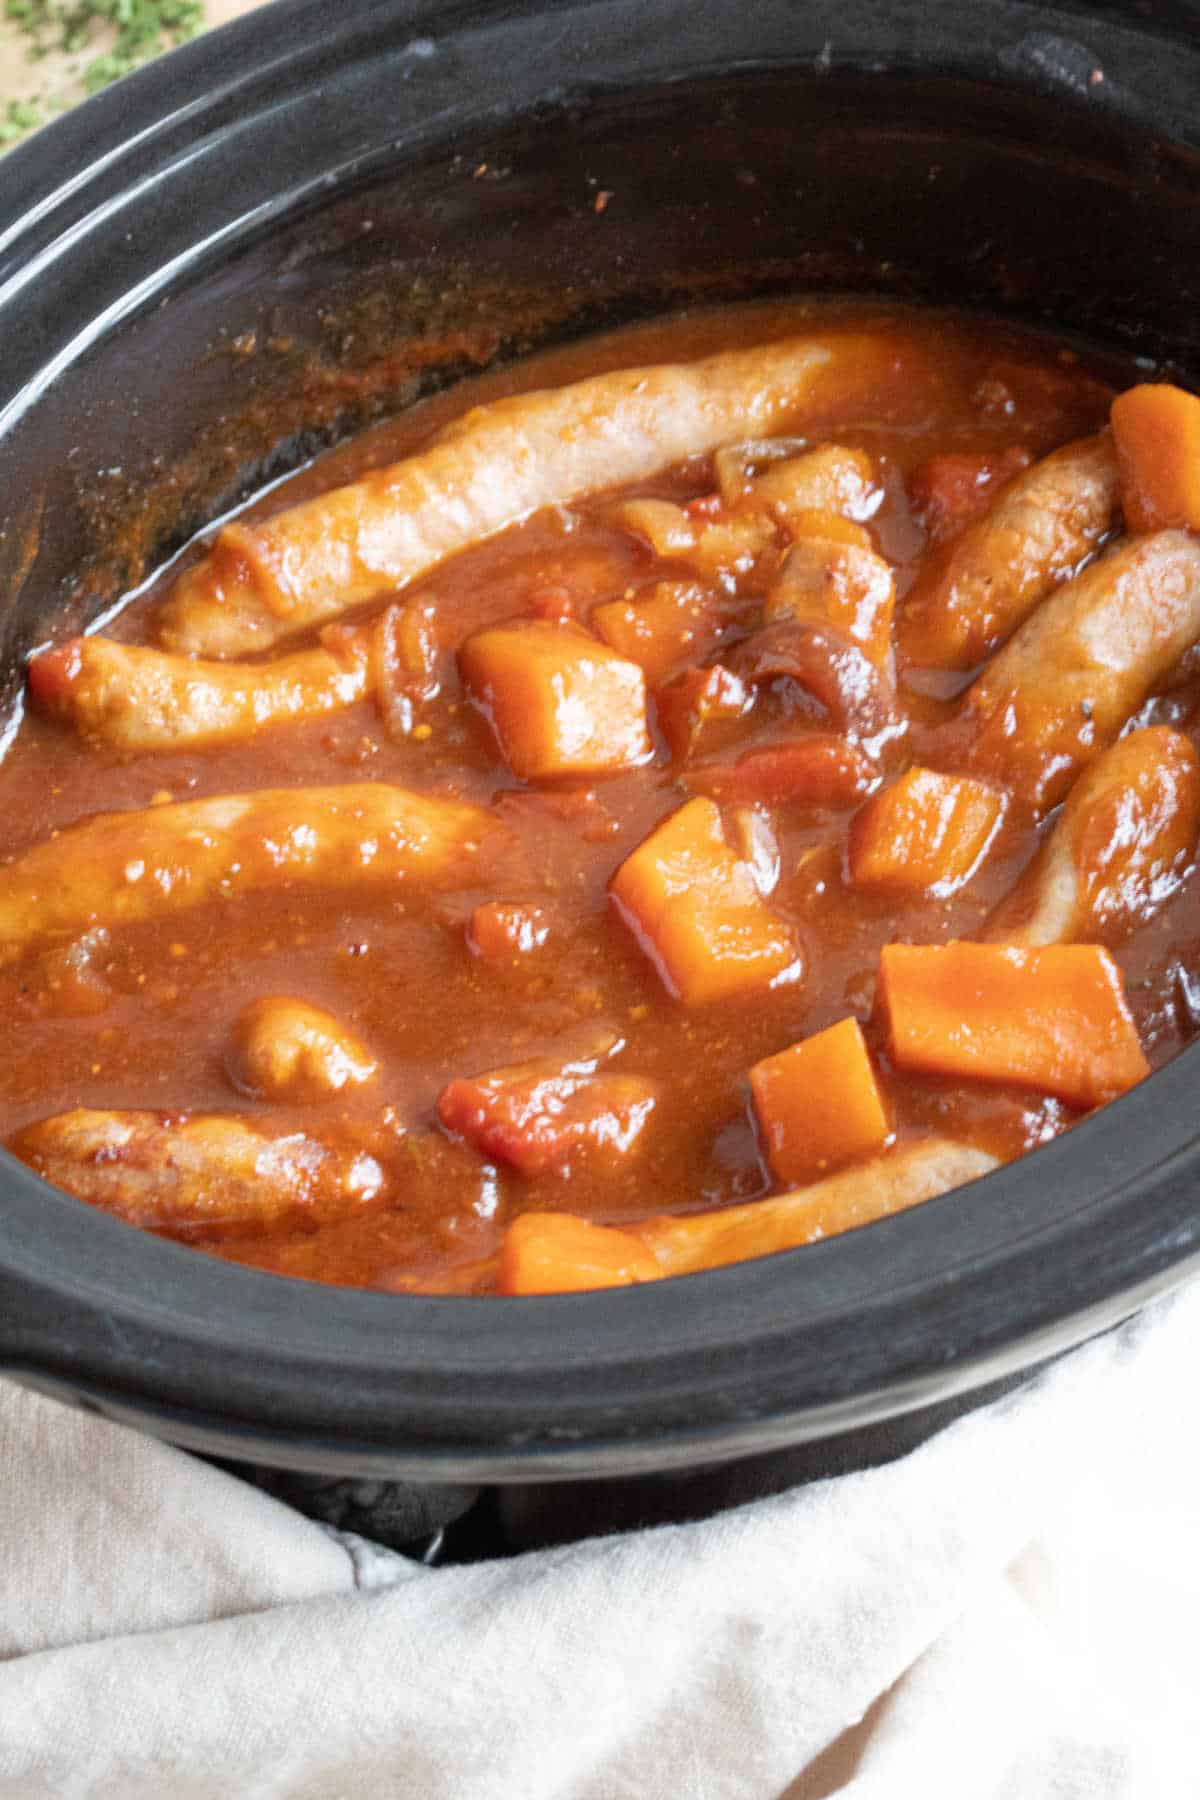 Slow cooker sausage casserole in a black crockpot.